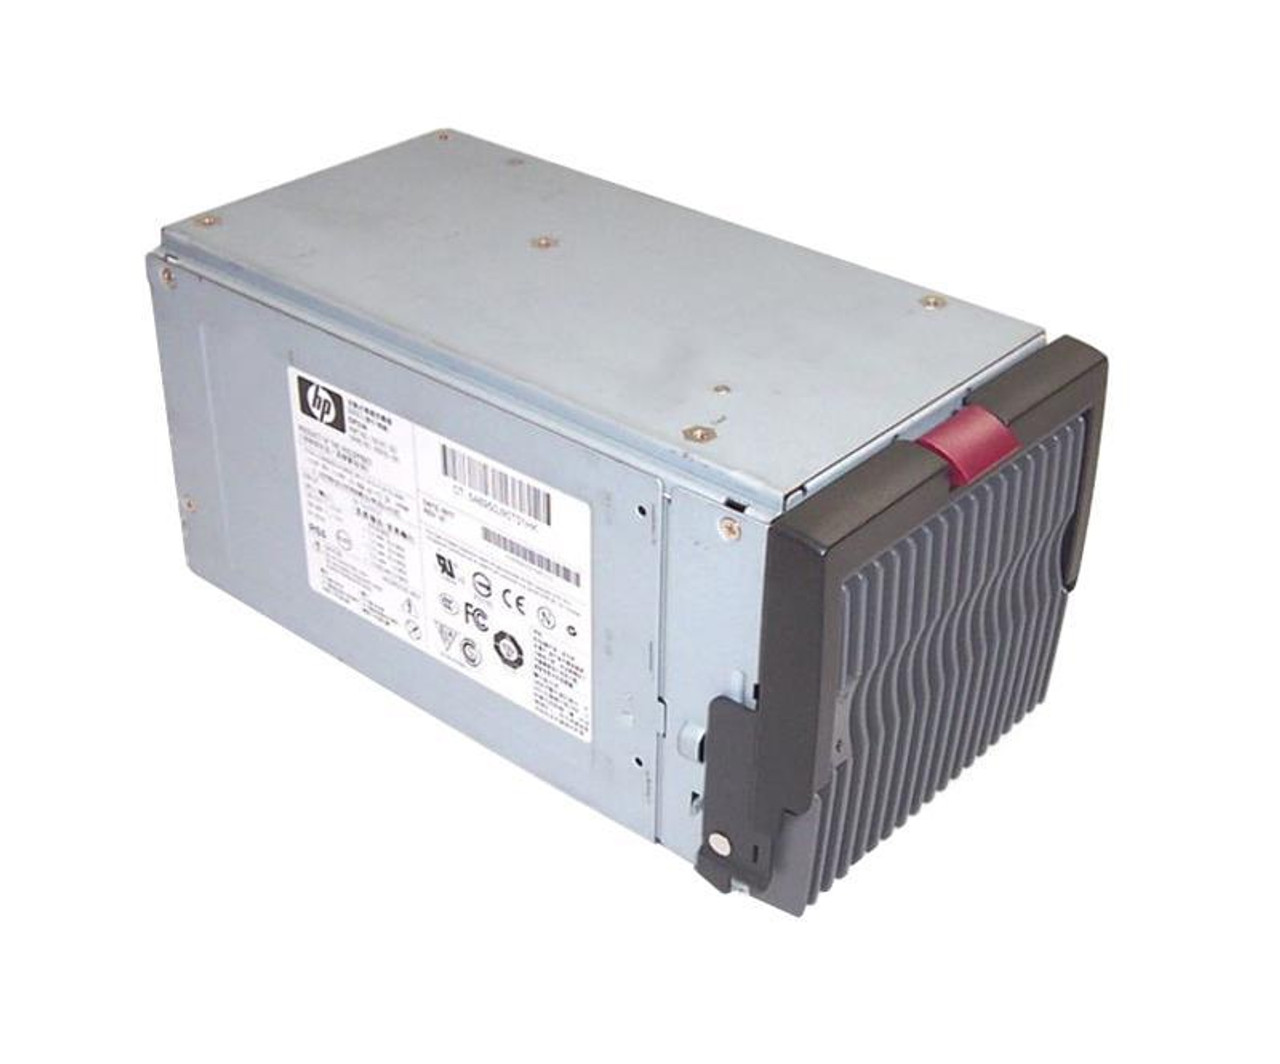 192201-002N HP 870-Watts 12A Redundant Hot Swap Power Supply for ProLiant DL580 G2/ DL585 G1 Server